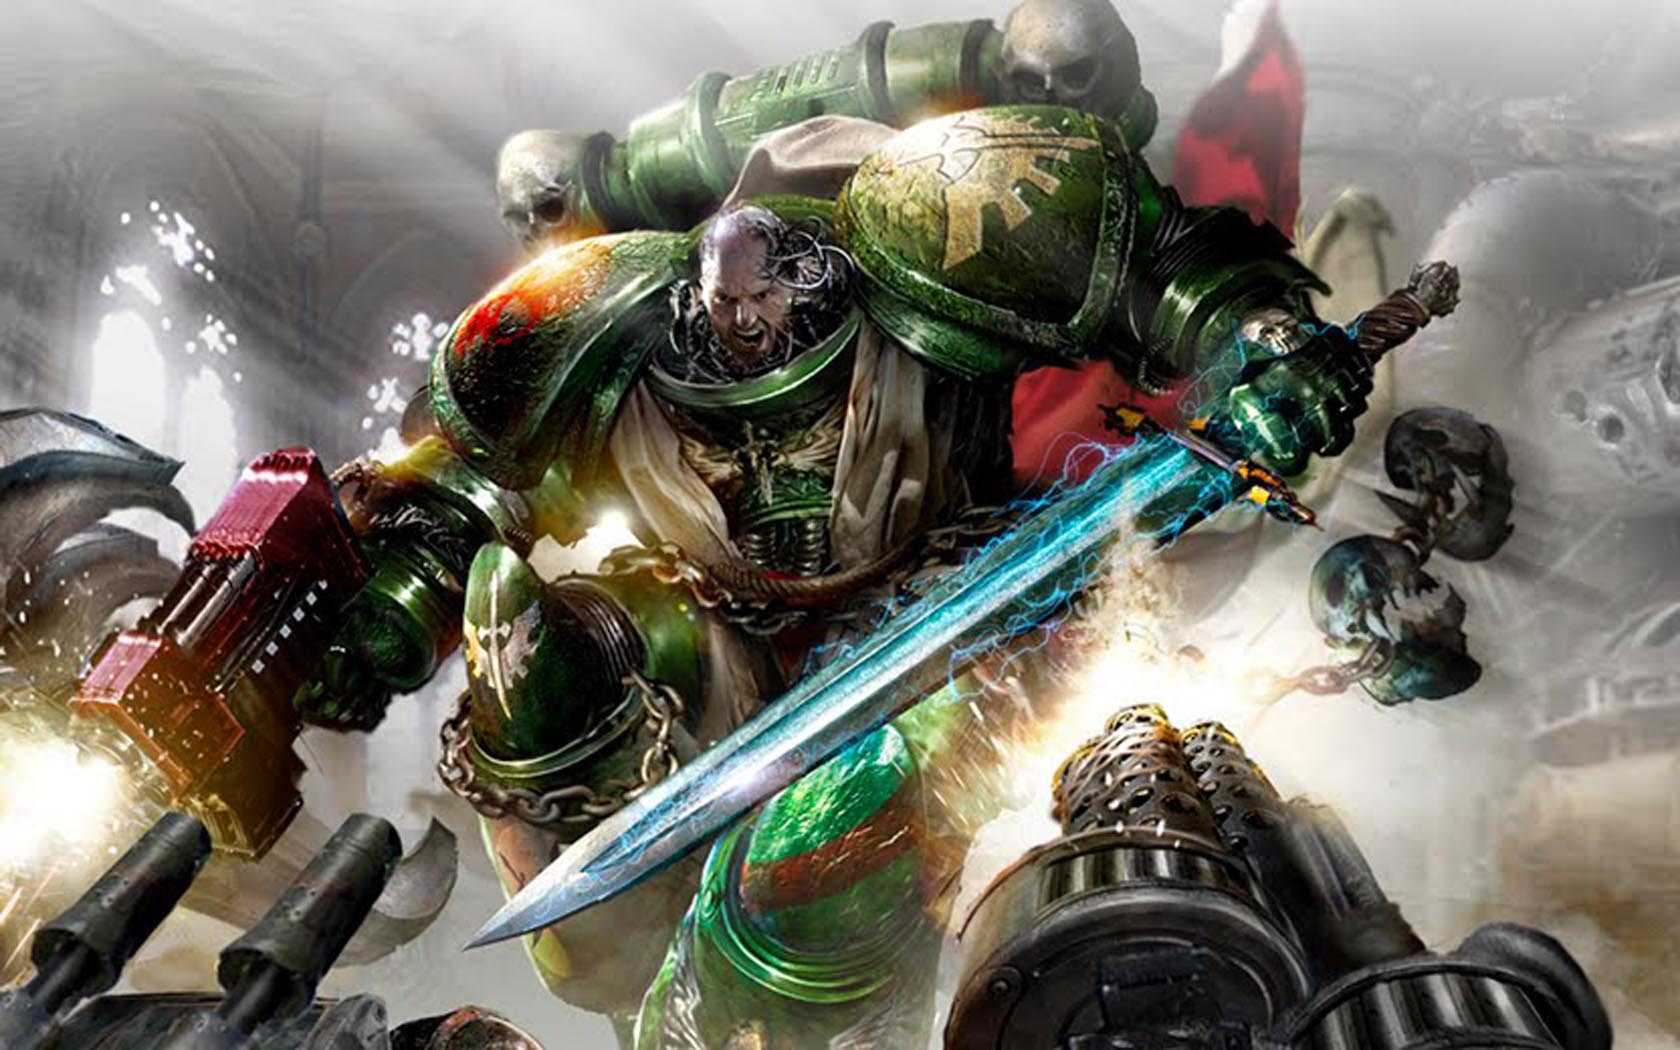 Sci-fi Space Marine warrior from Warhammer 40k video game wallpaper.